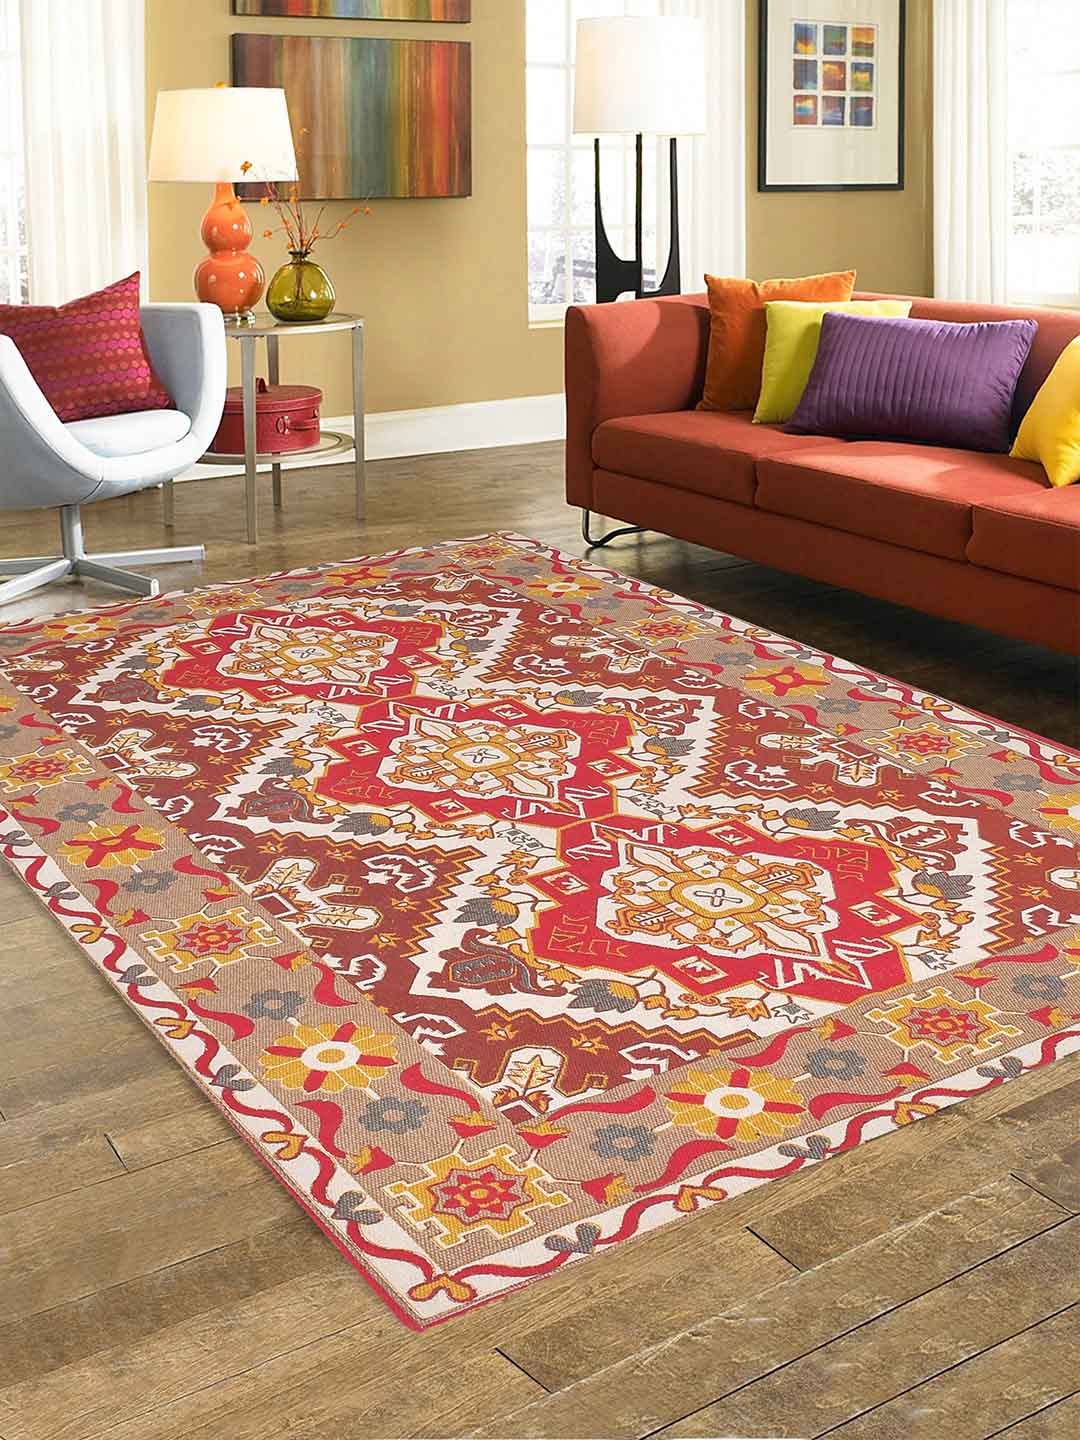 Blanc9 Udaipur Rusty Red Printed 4'x5.5' Cotton Carpet